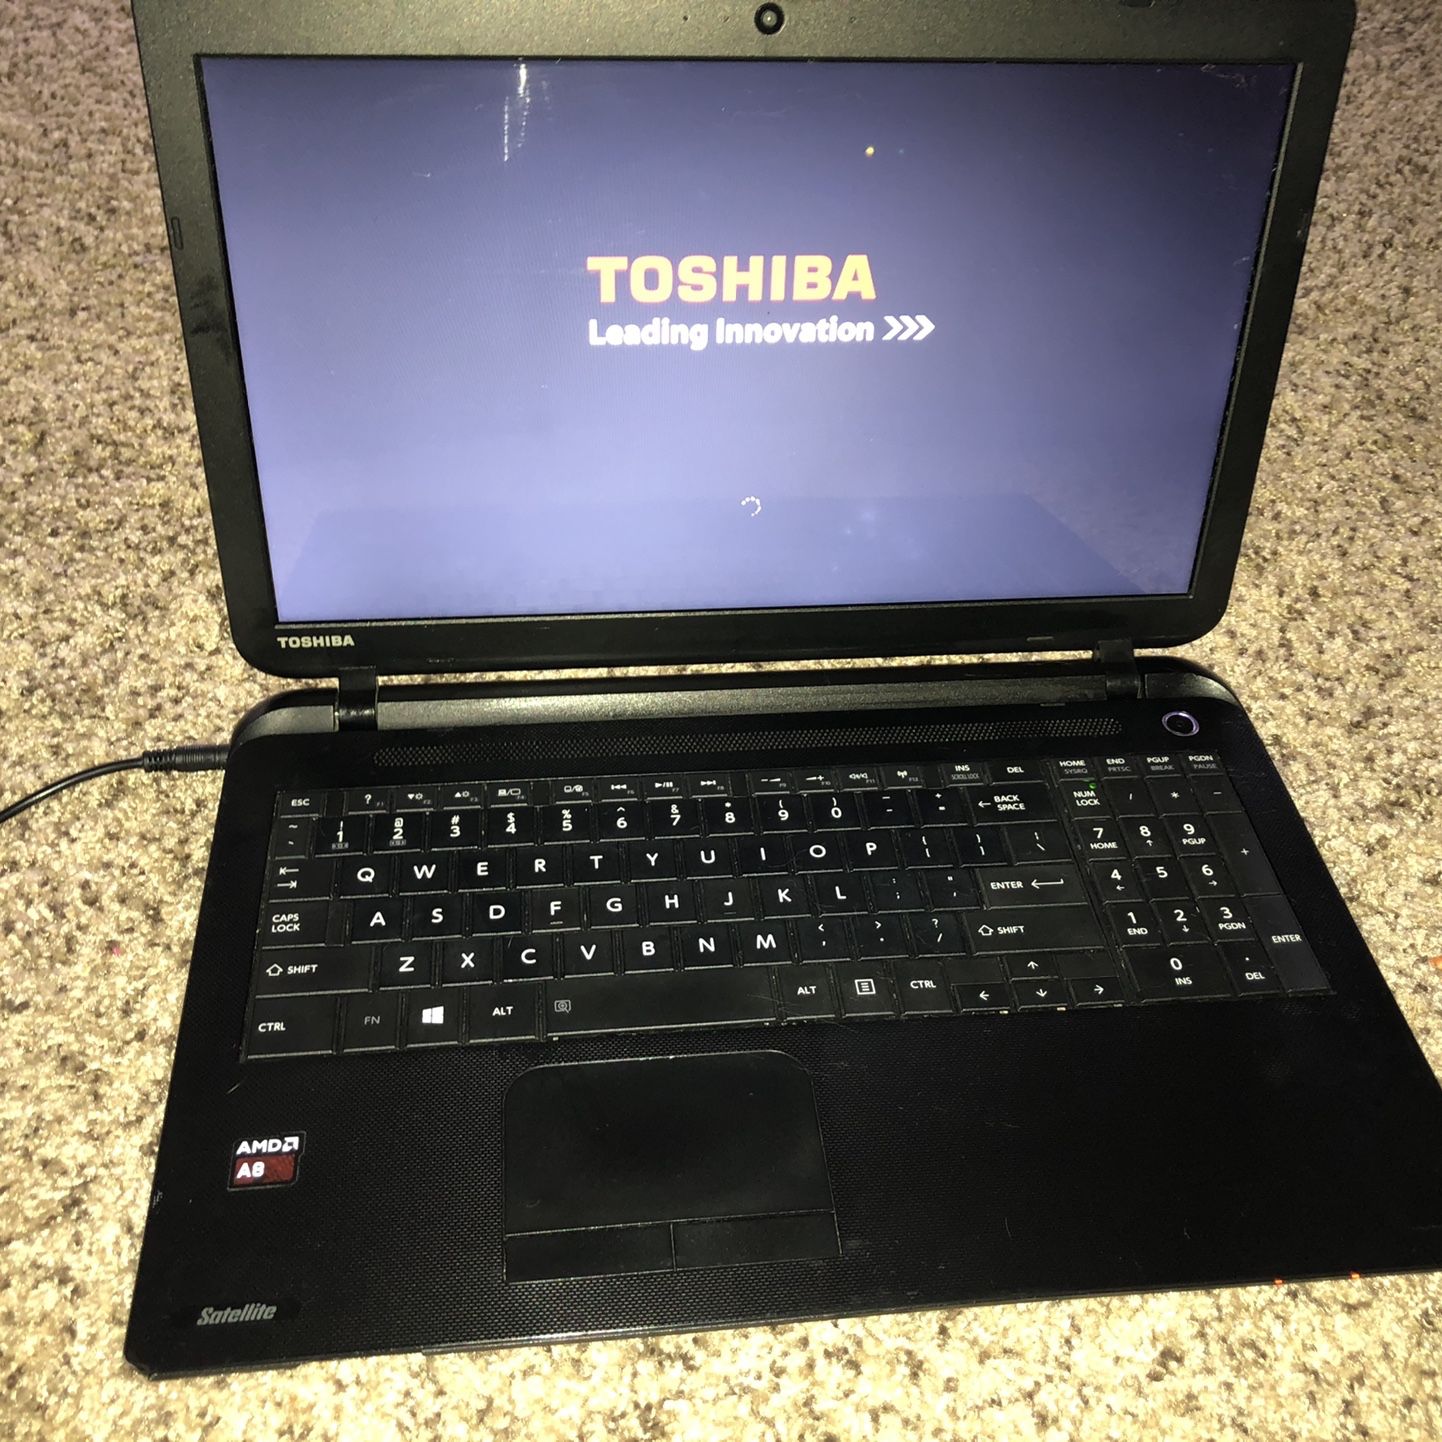 Toshiba Sattelite Laptop Used - Model No. c55d-b5212